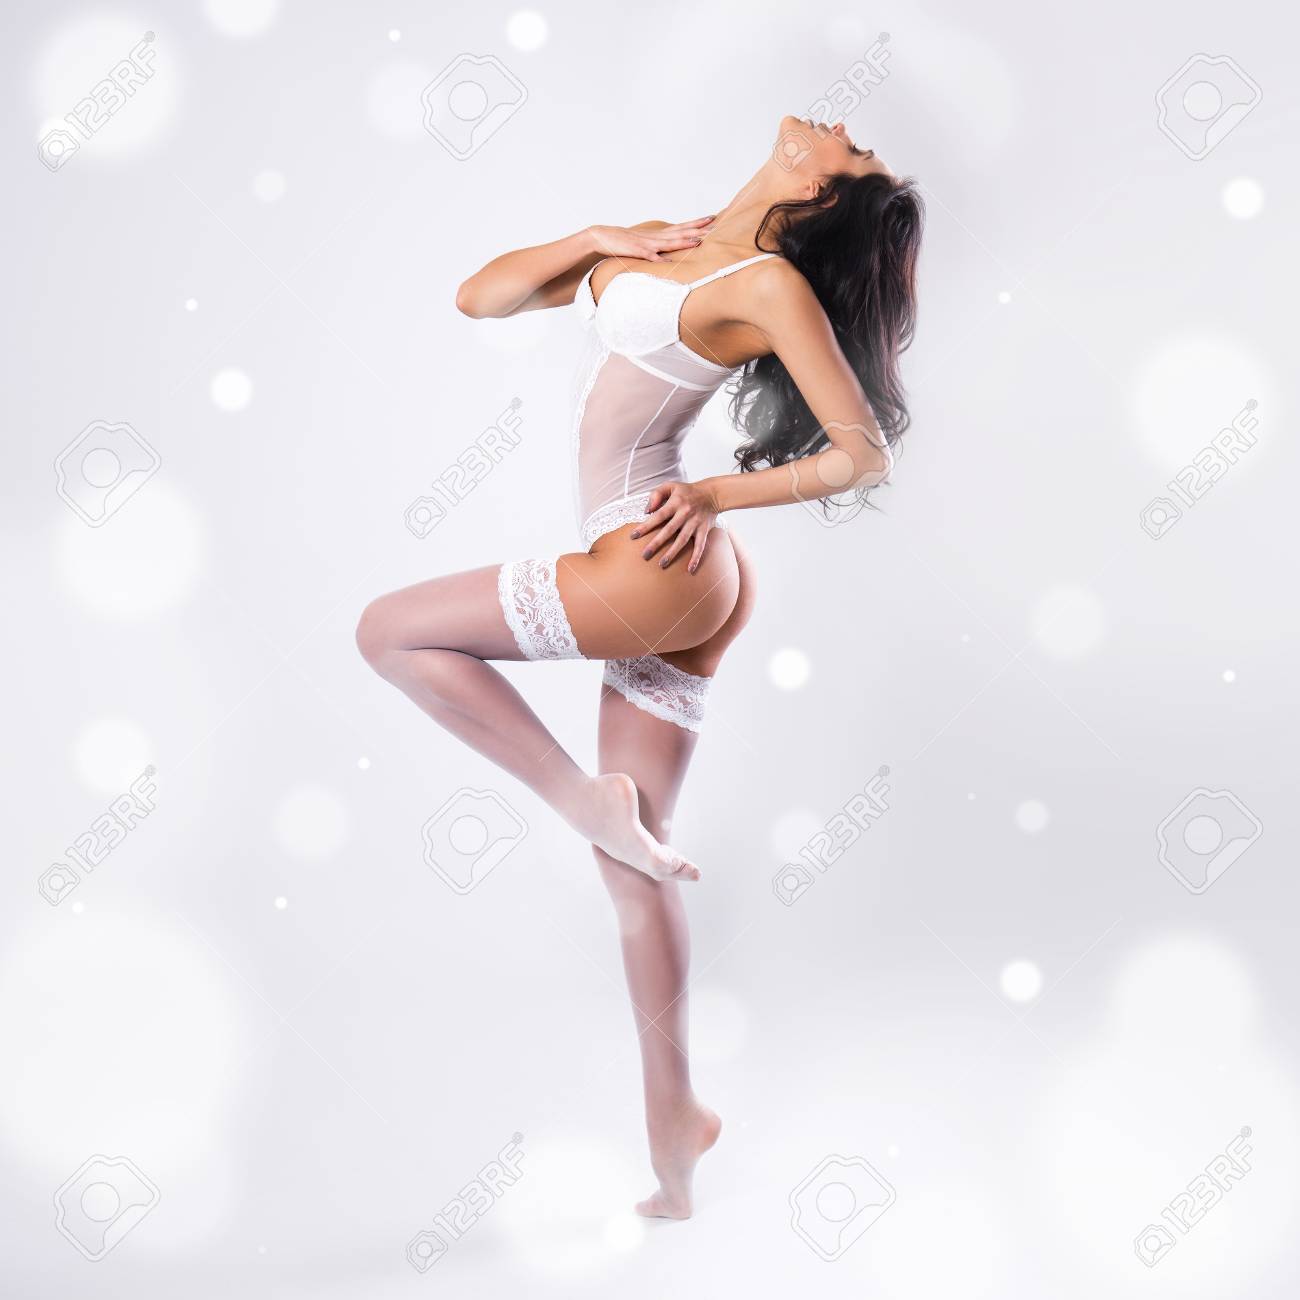 Woman Dancing In Lingerie ryan conner